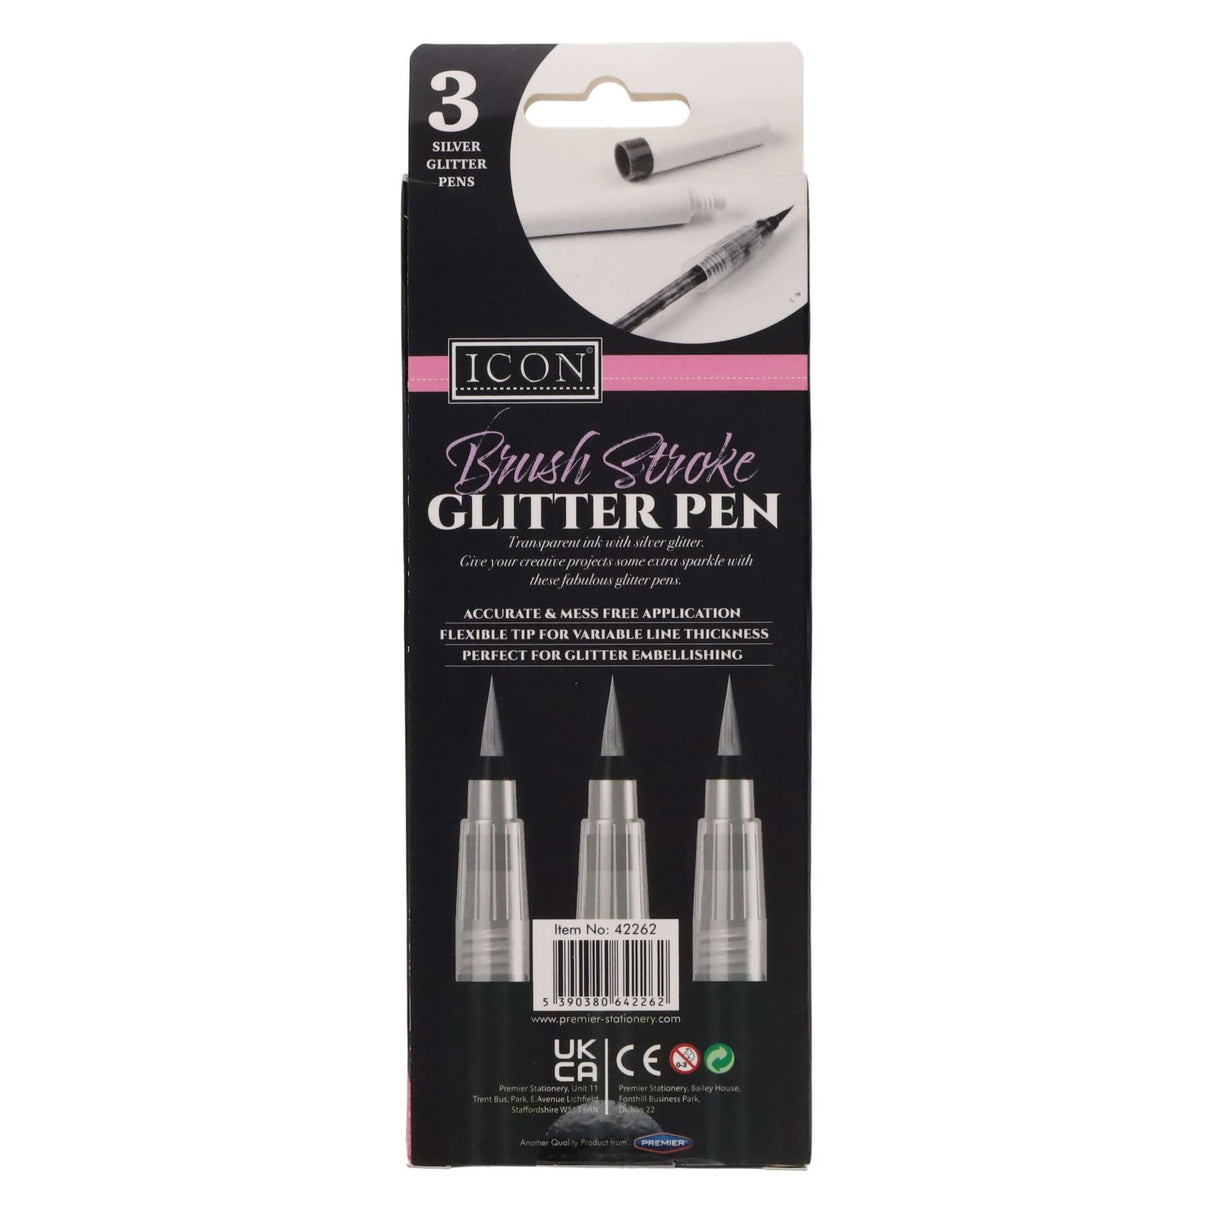 Icon Brush Stroke Glitter Pens | Stationery Shop UK